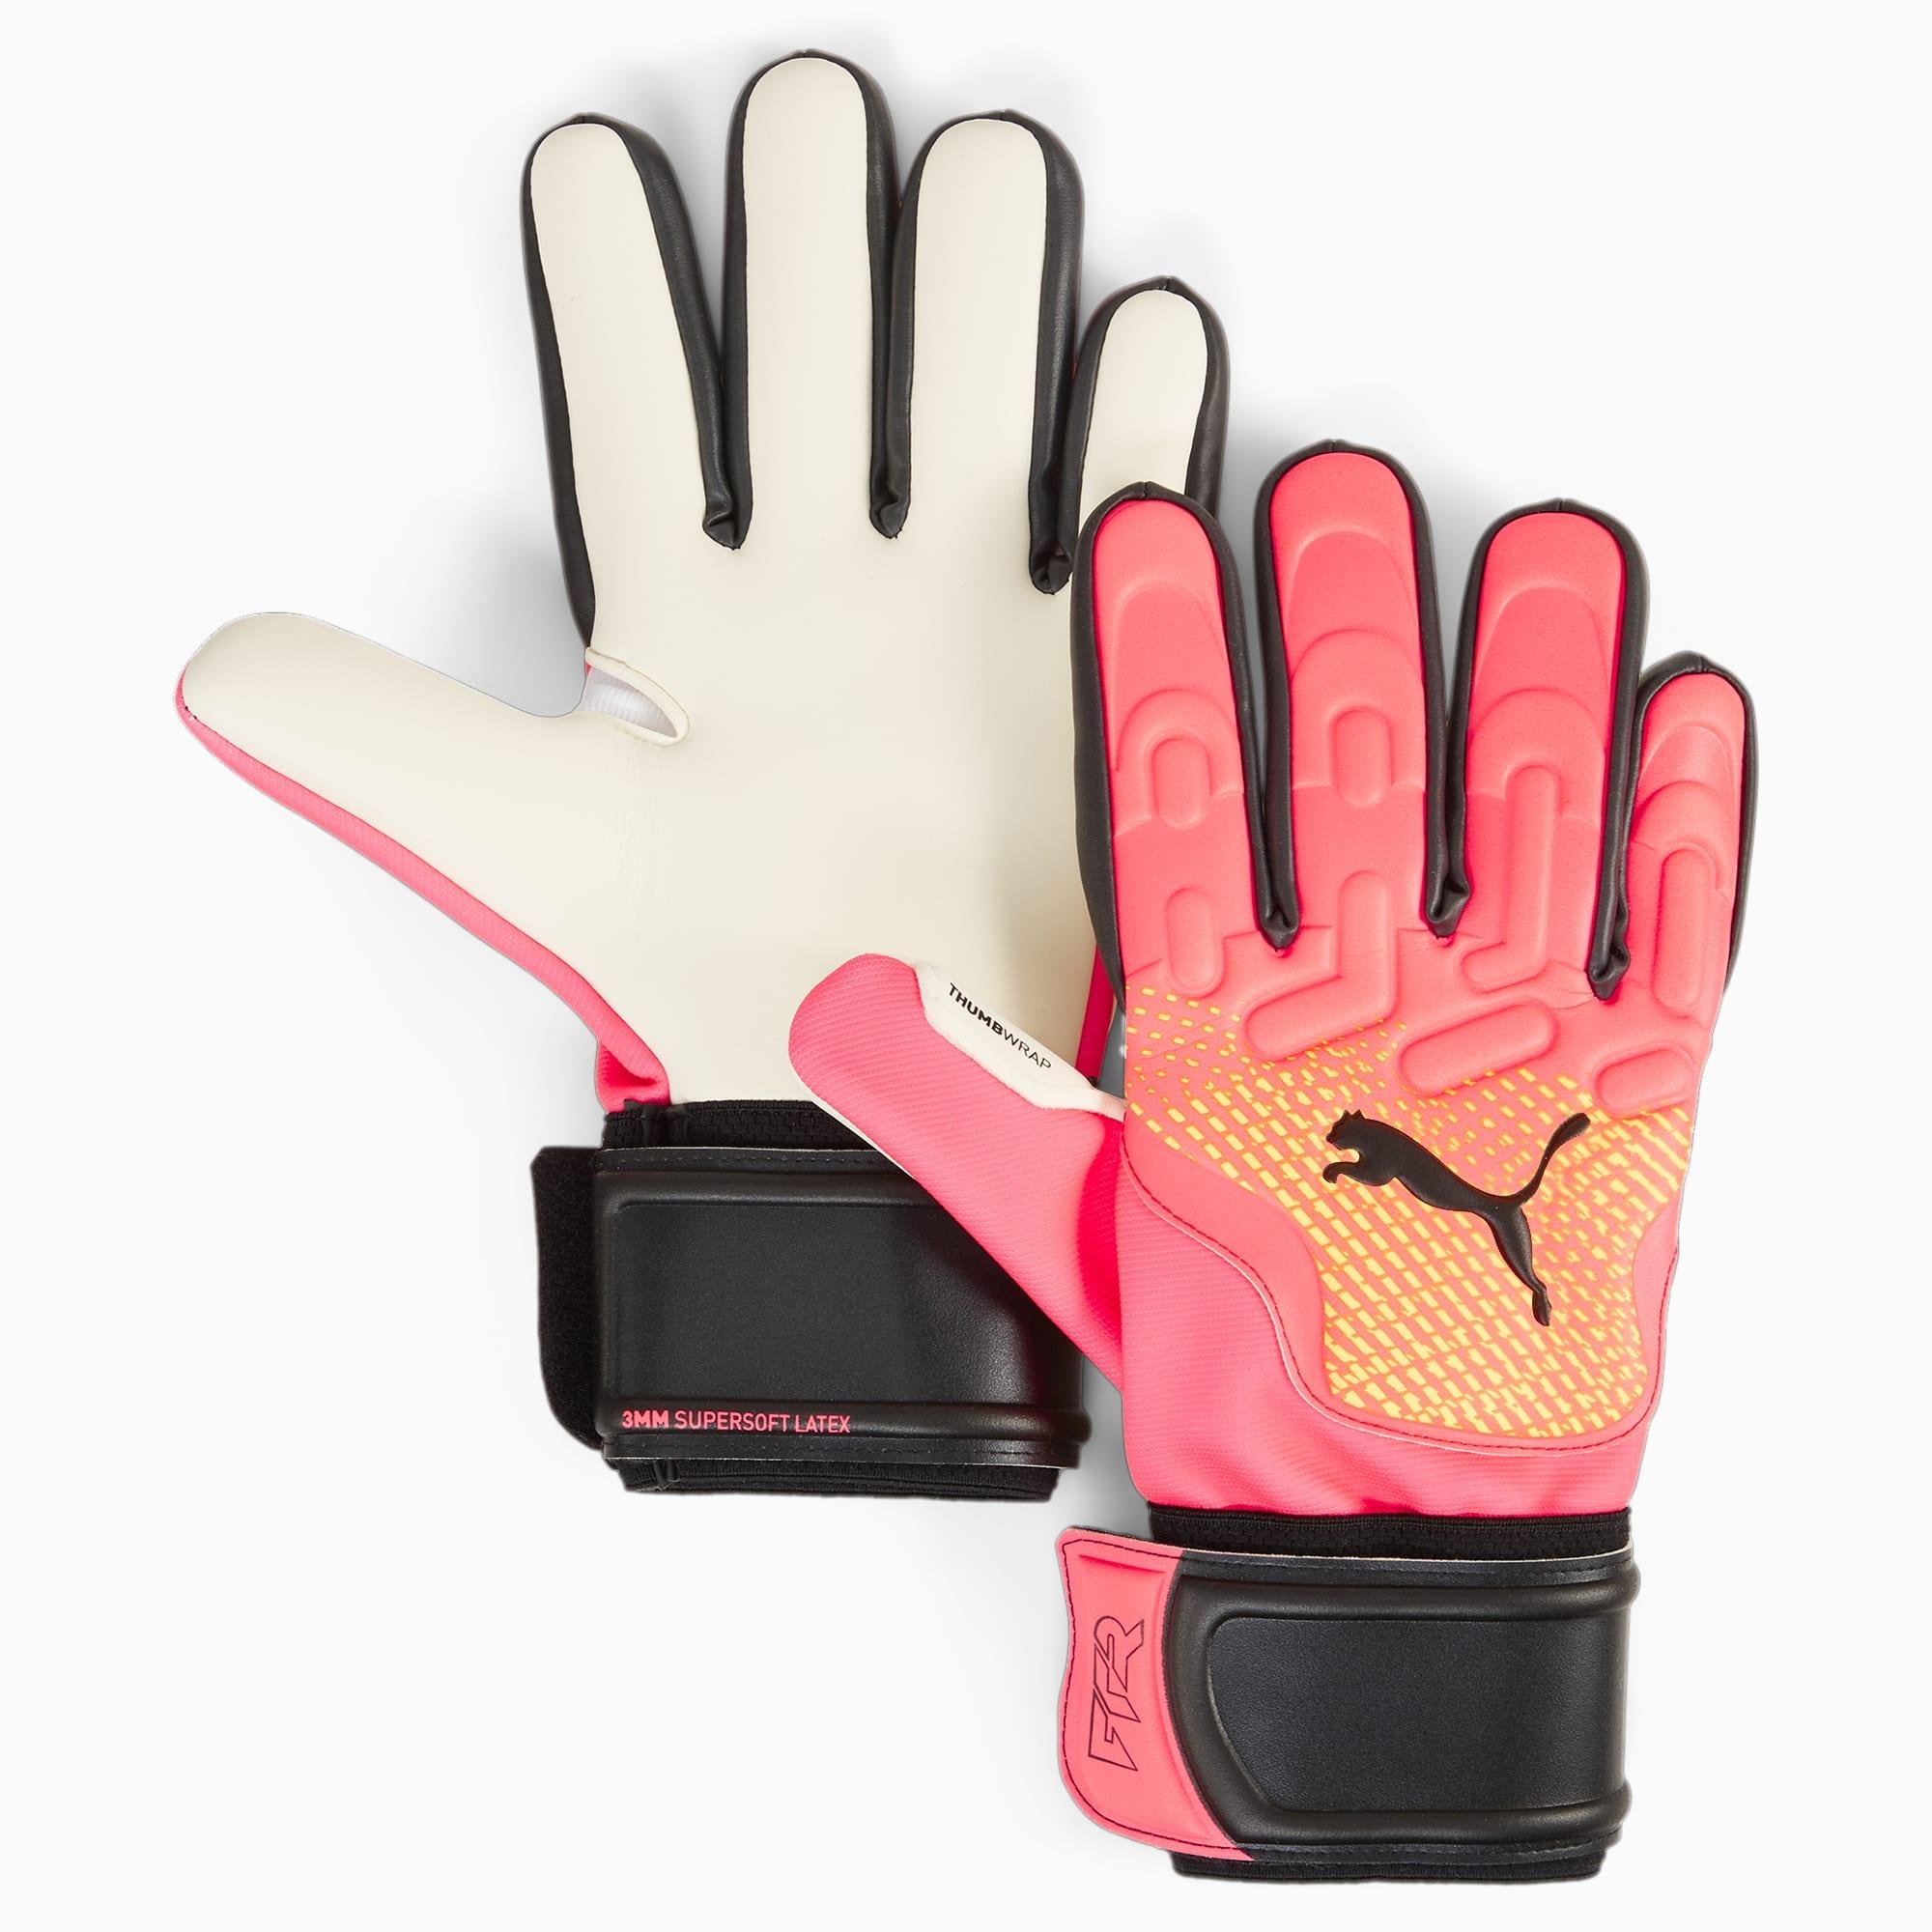 FUTURE Match Goalkeeper Gloves by PUMA